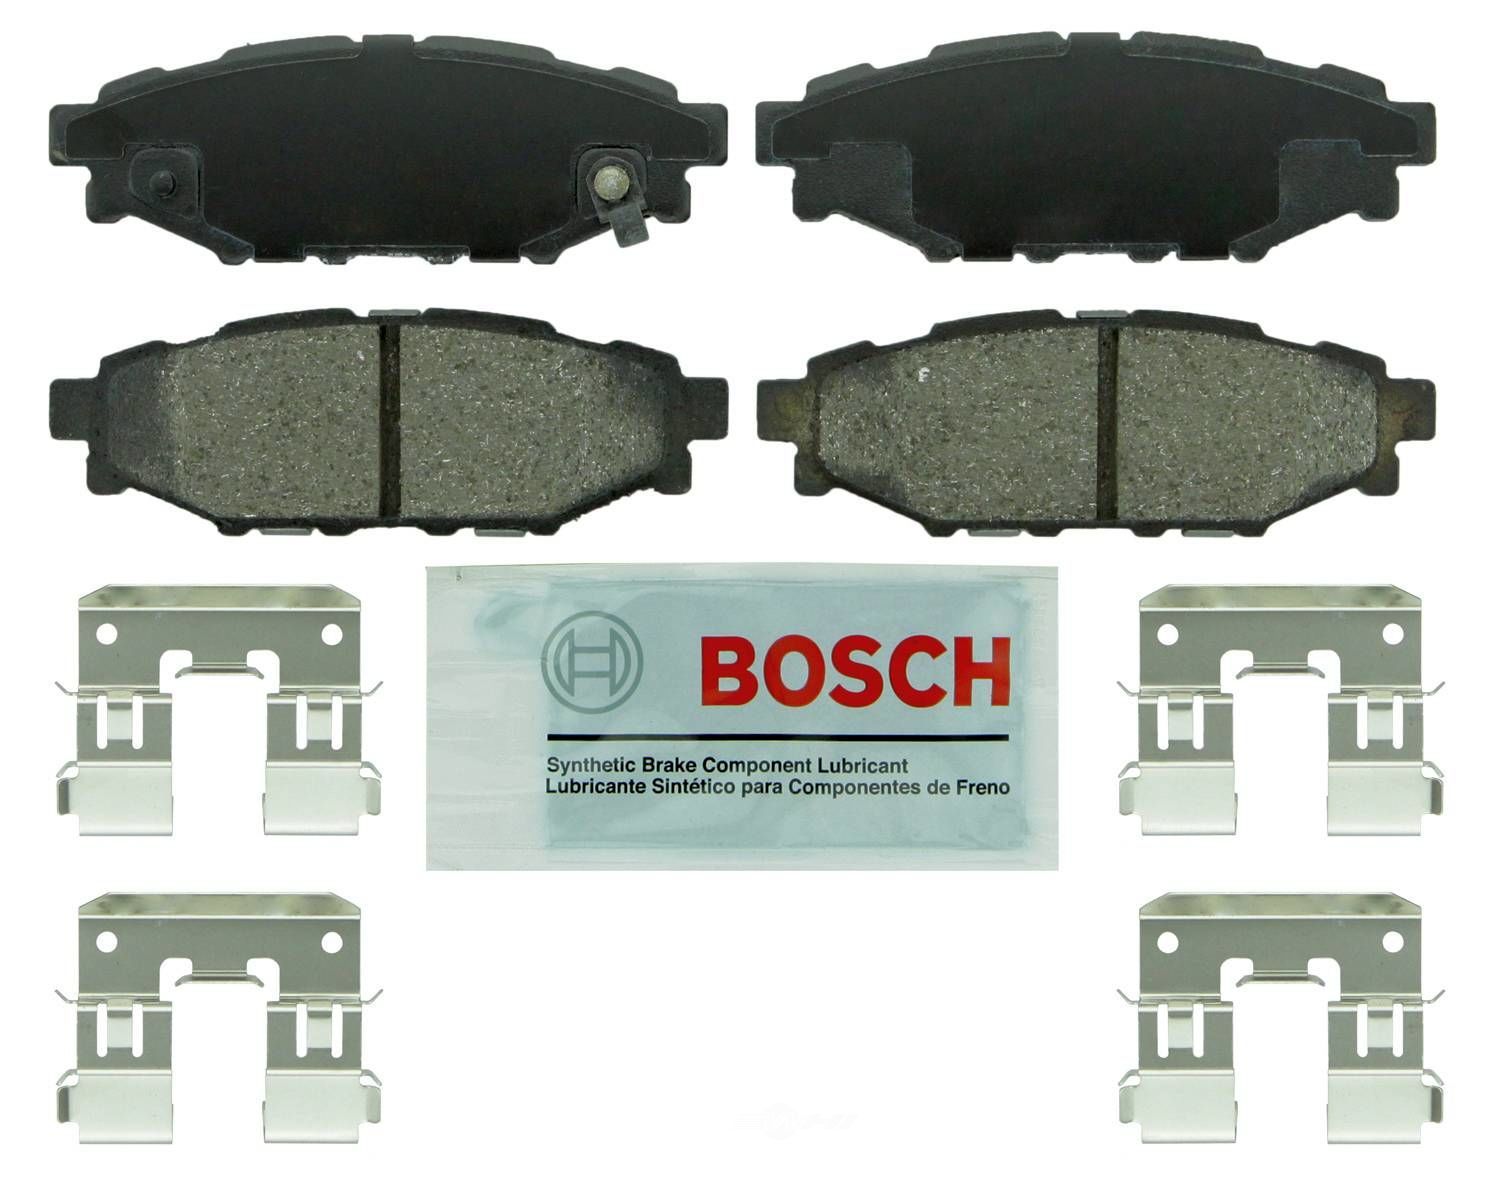 BOSCH BRAKE - Bosch Blue Ceramic Brake Pads with Hardware (Rear) - BQC BE1114H